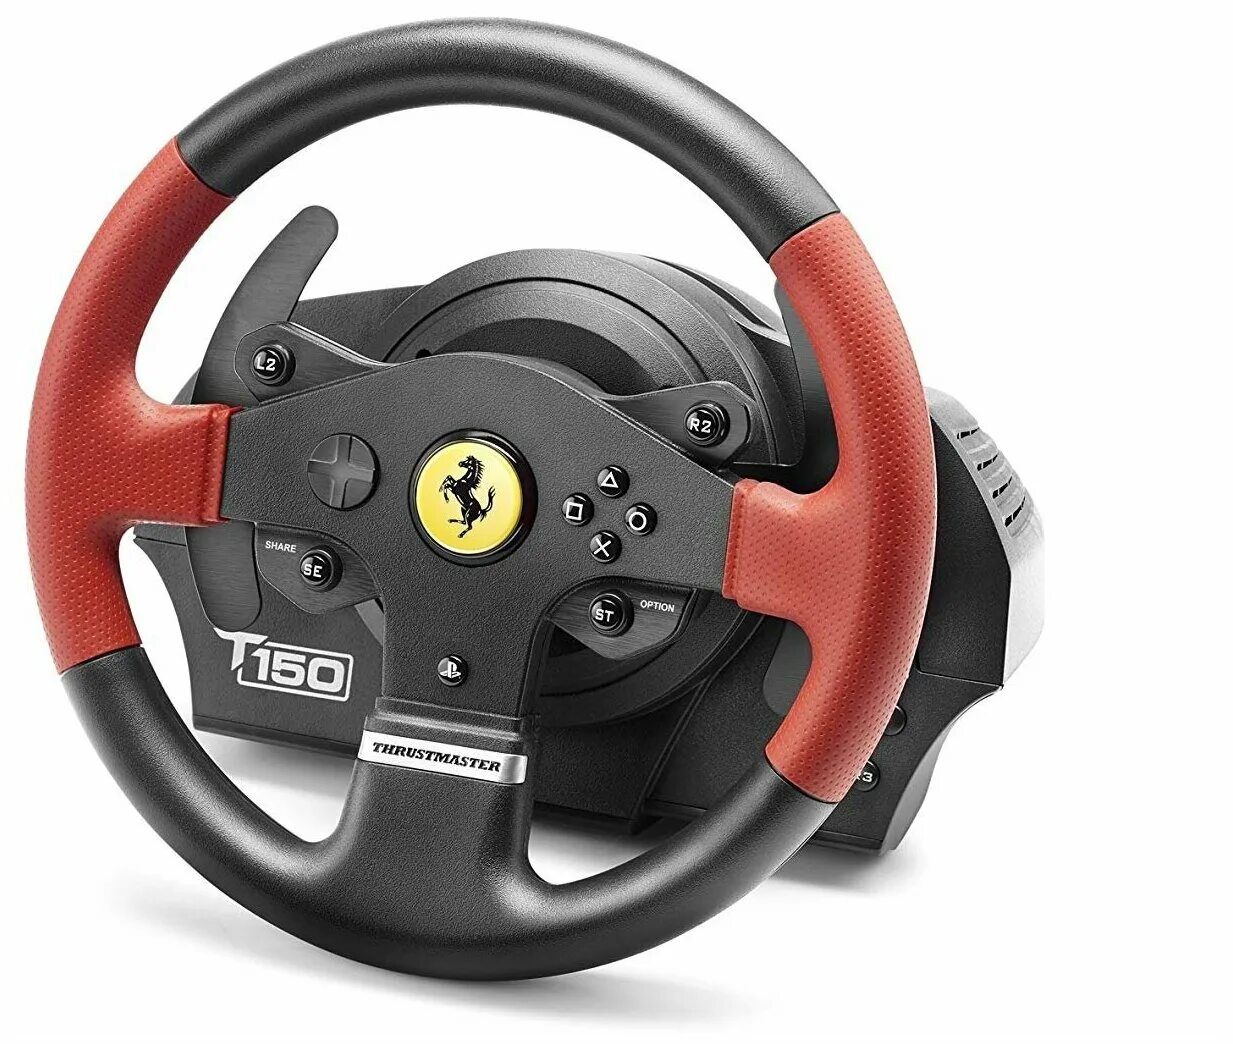 Ferrari t80. Thrustmaster t150 Ferrari Force feedback. Thrustmaster t150 Ferrari Wheel Force. Игровой руль Thrustmaster t150. Руль Thrustmaster t150 150 Ferrari.